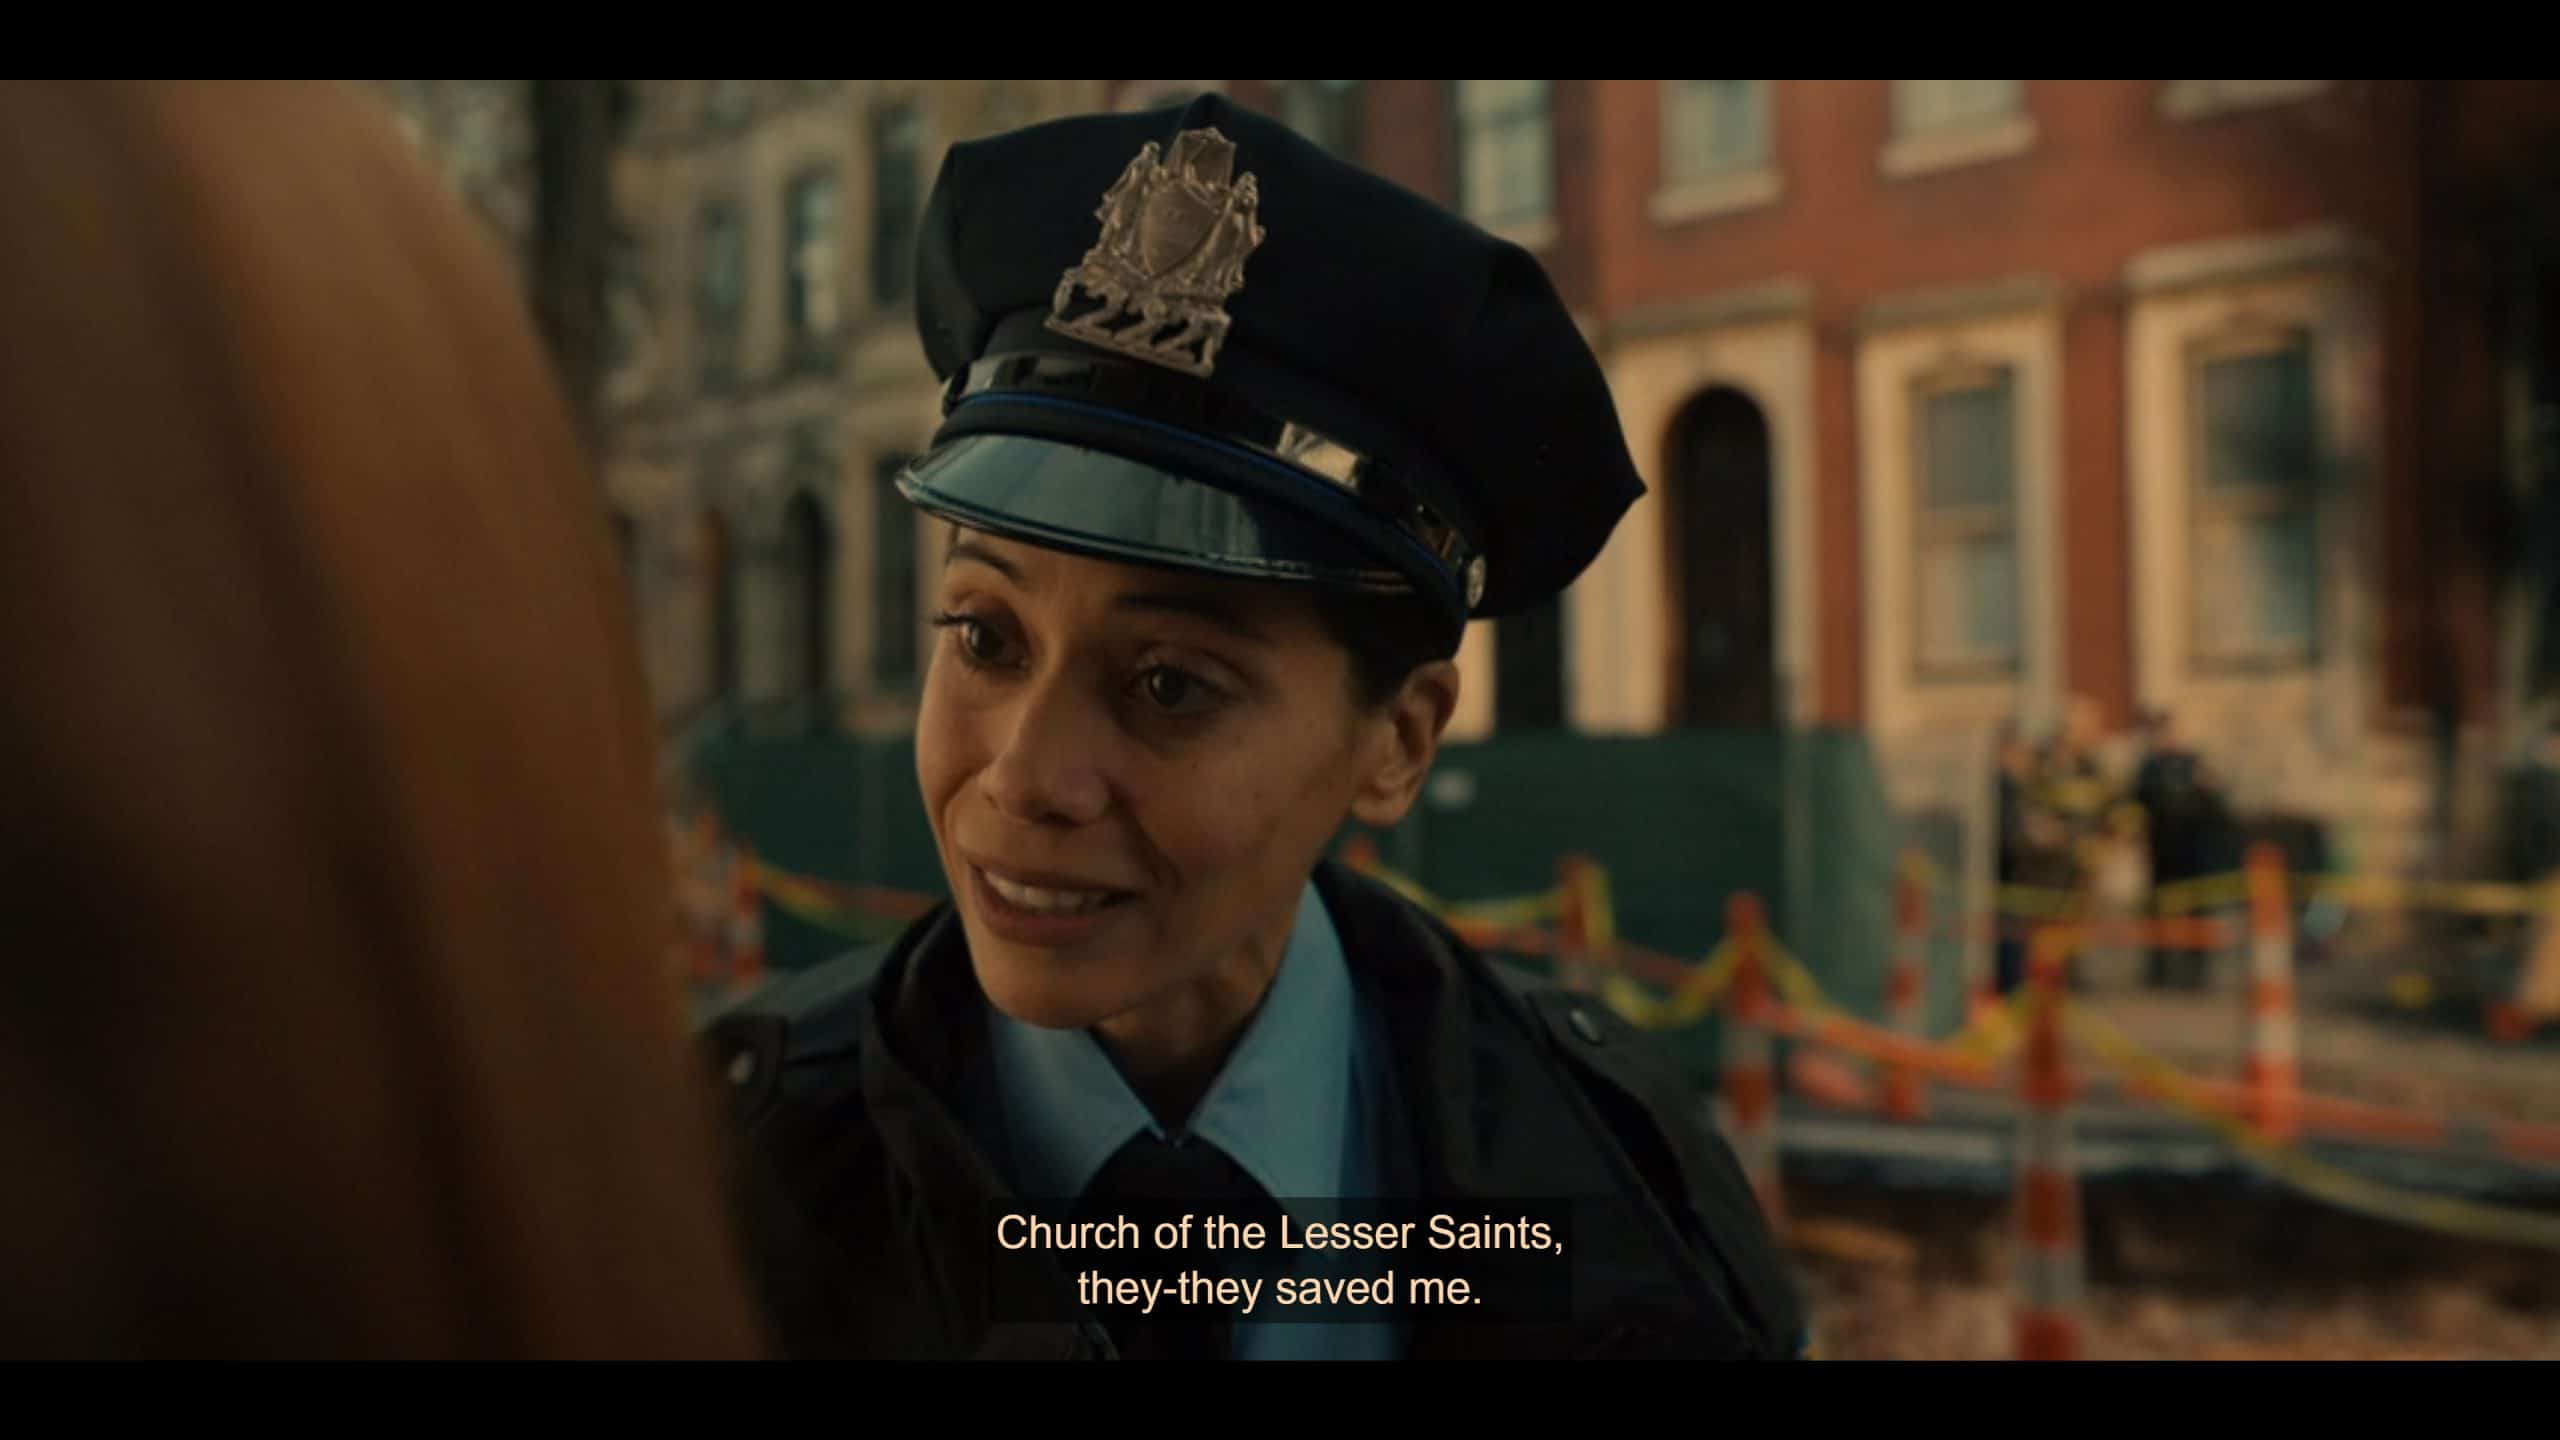 Victoria Cartagena as Officer Reyes